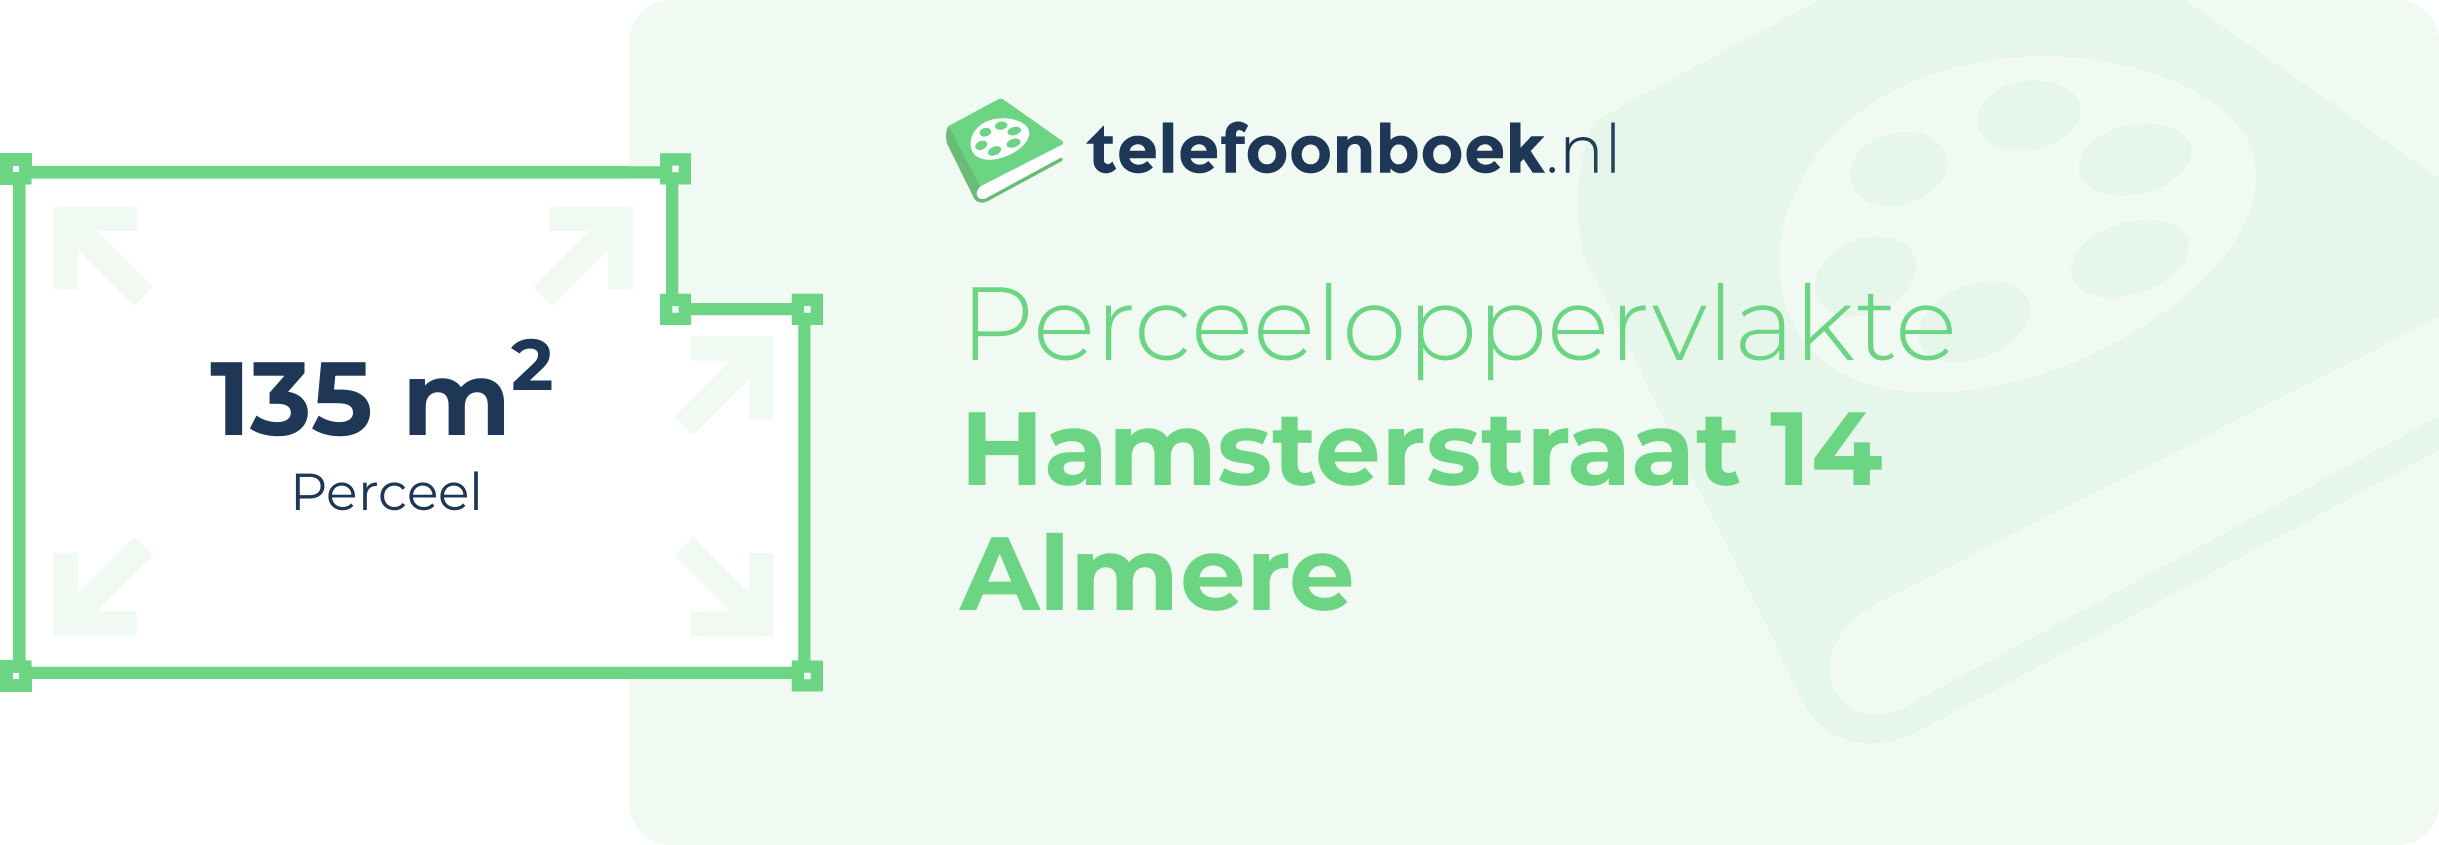 Perceeloppervlakte Hamsterstraat 14 Almere